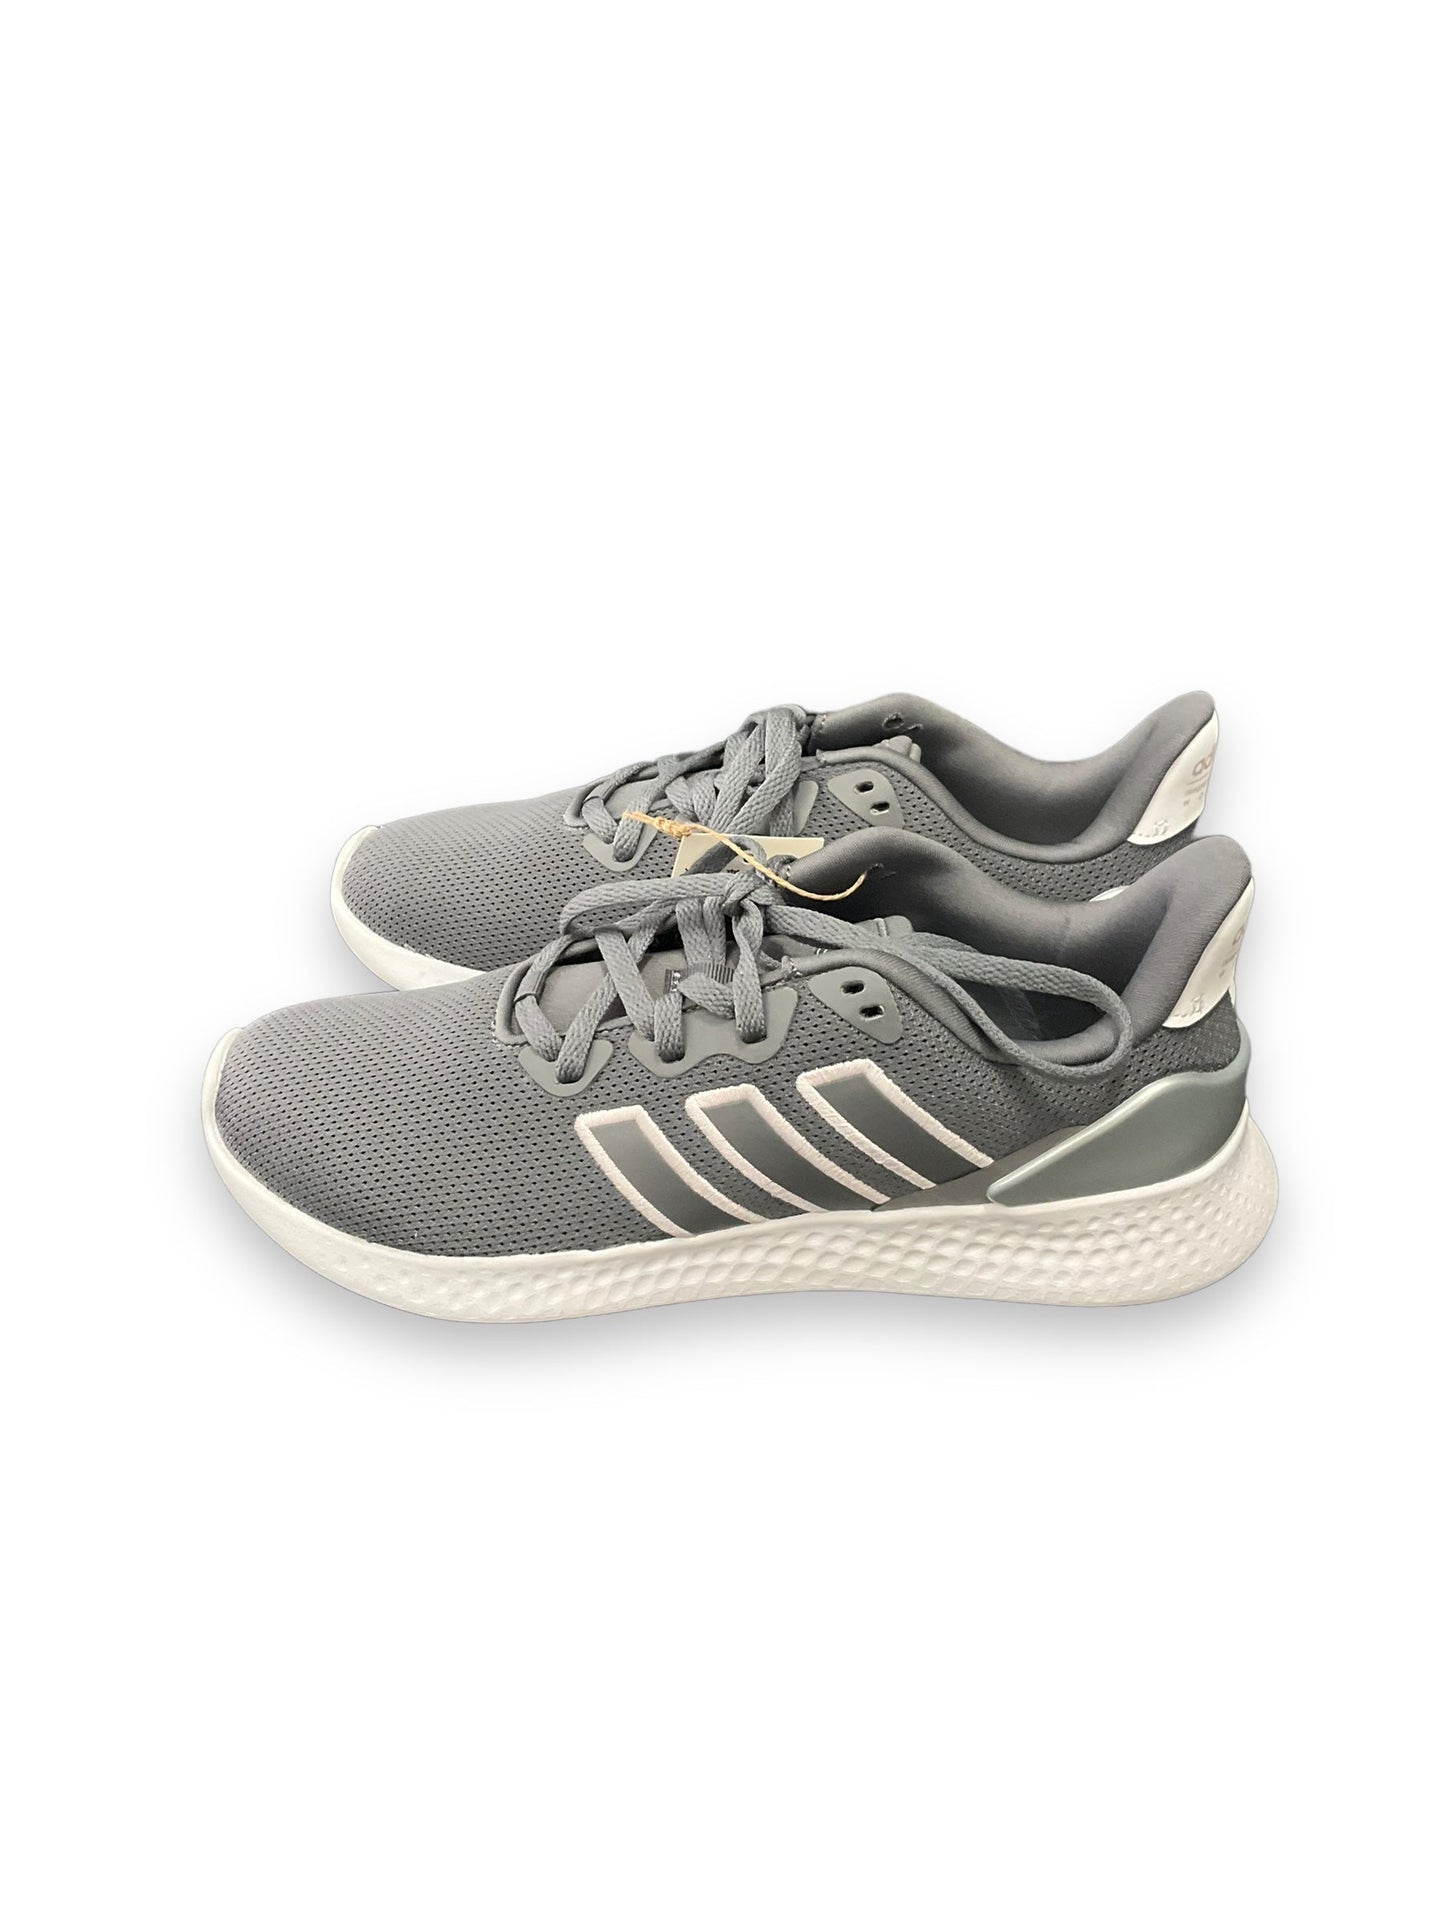 Grey Shoes Athletic Adidas, Size 7.5